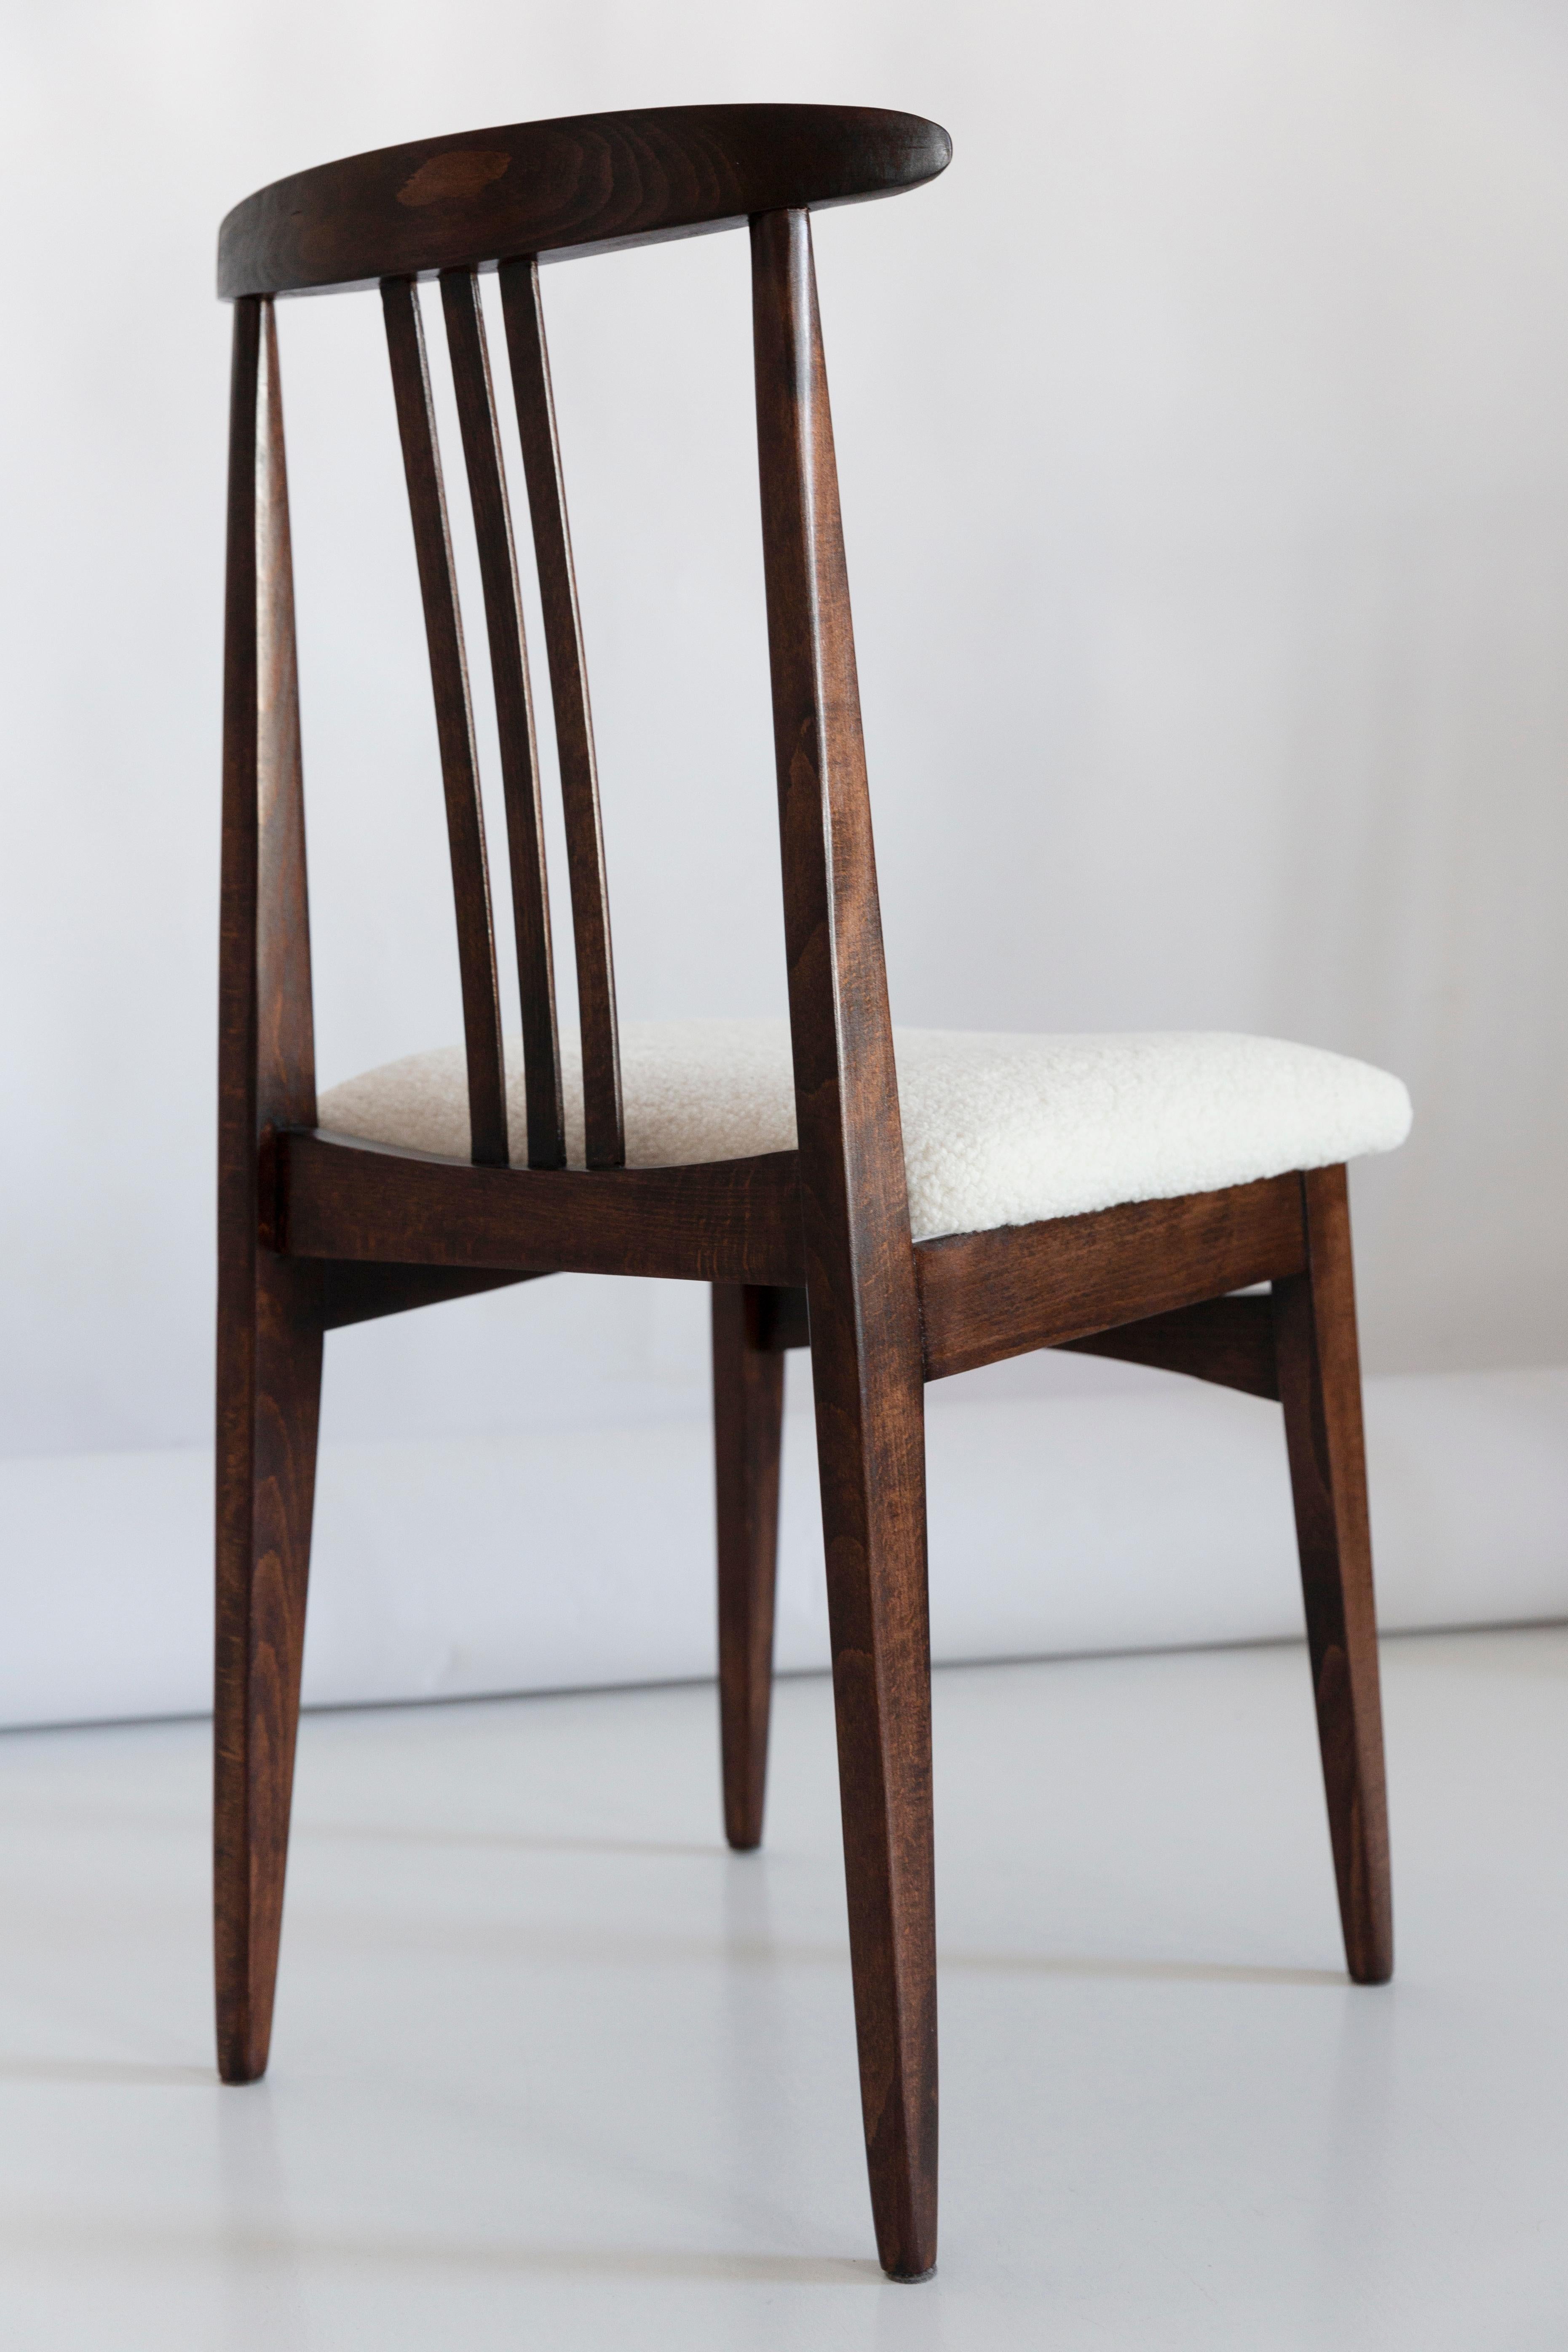 Twelve Mid-Century Light Boucle Chair, Designed by M. Zielinski, Europe, 1960s For Sale 3